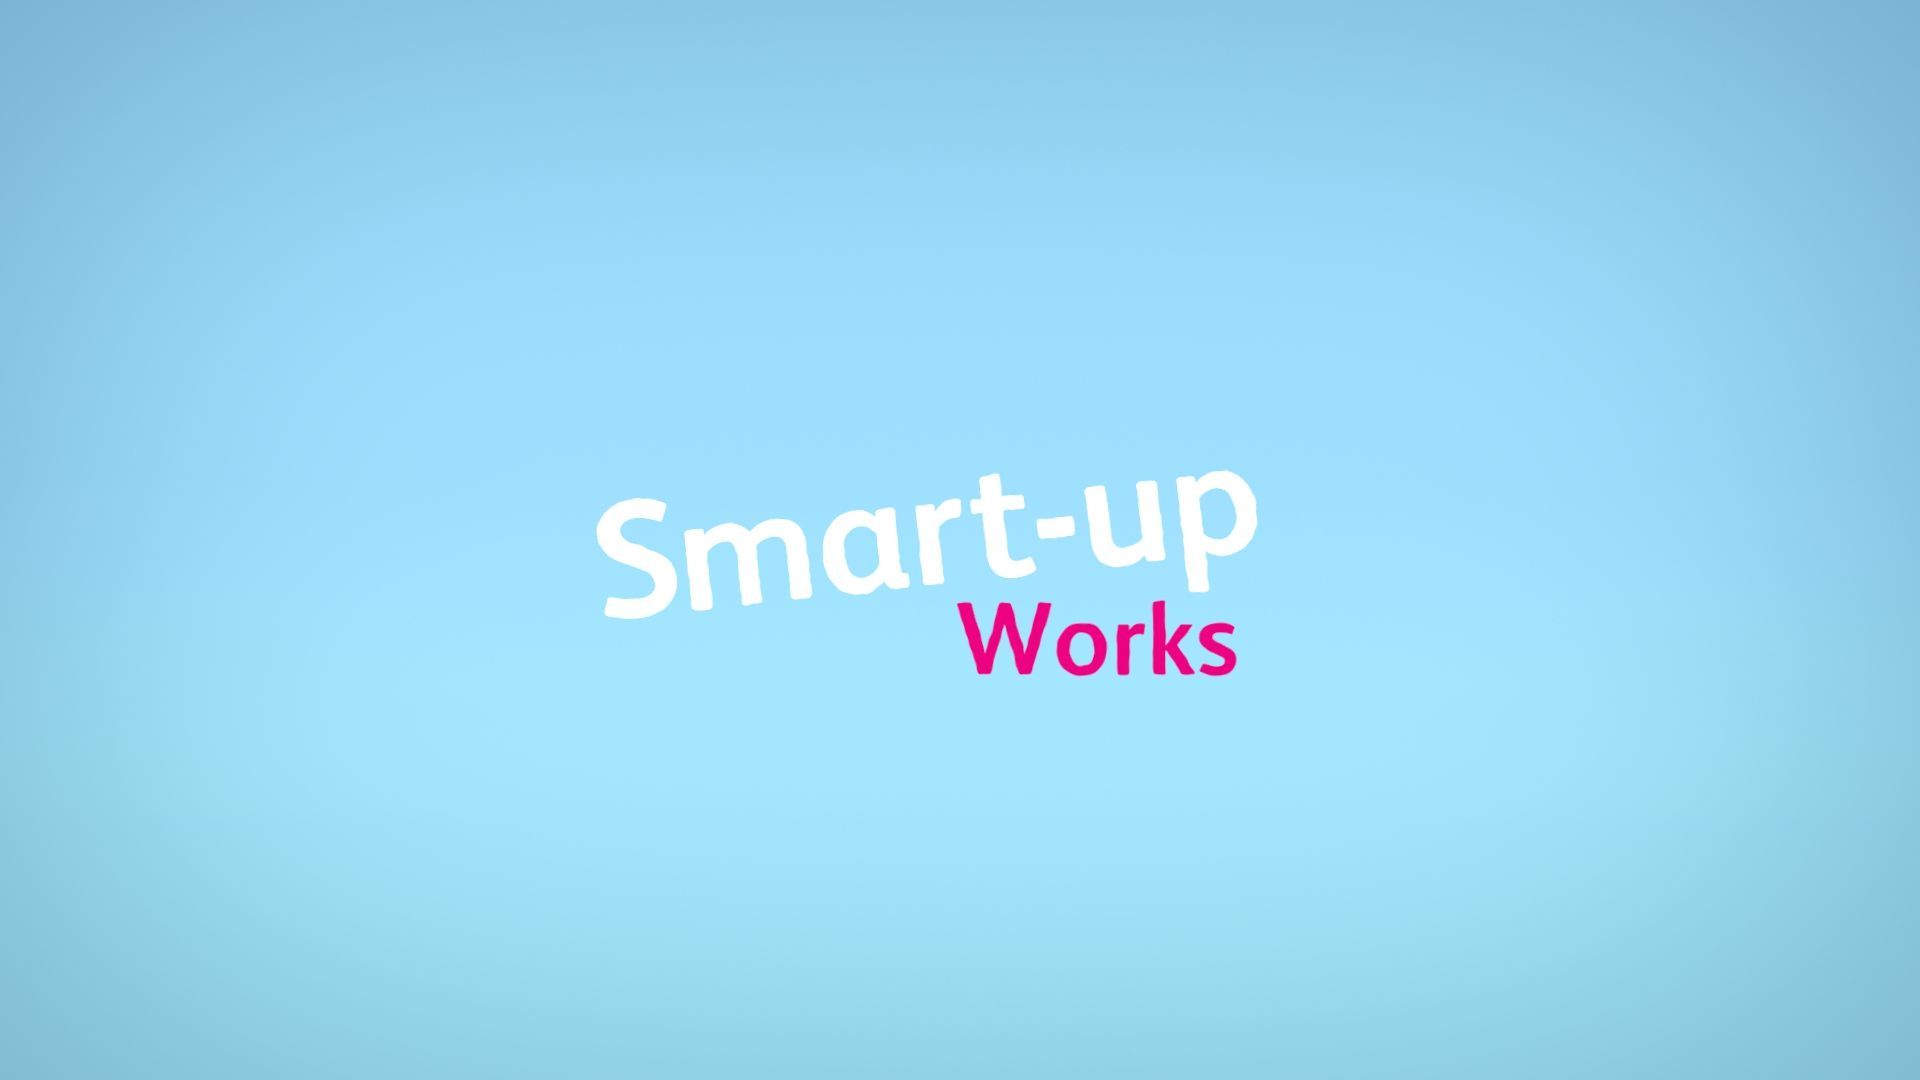 Smart-up works Video